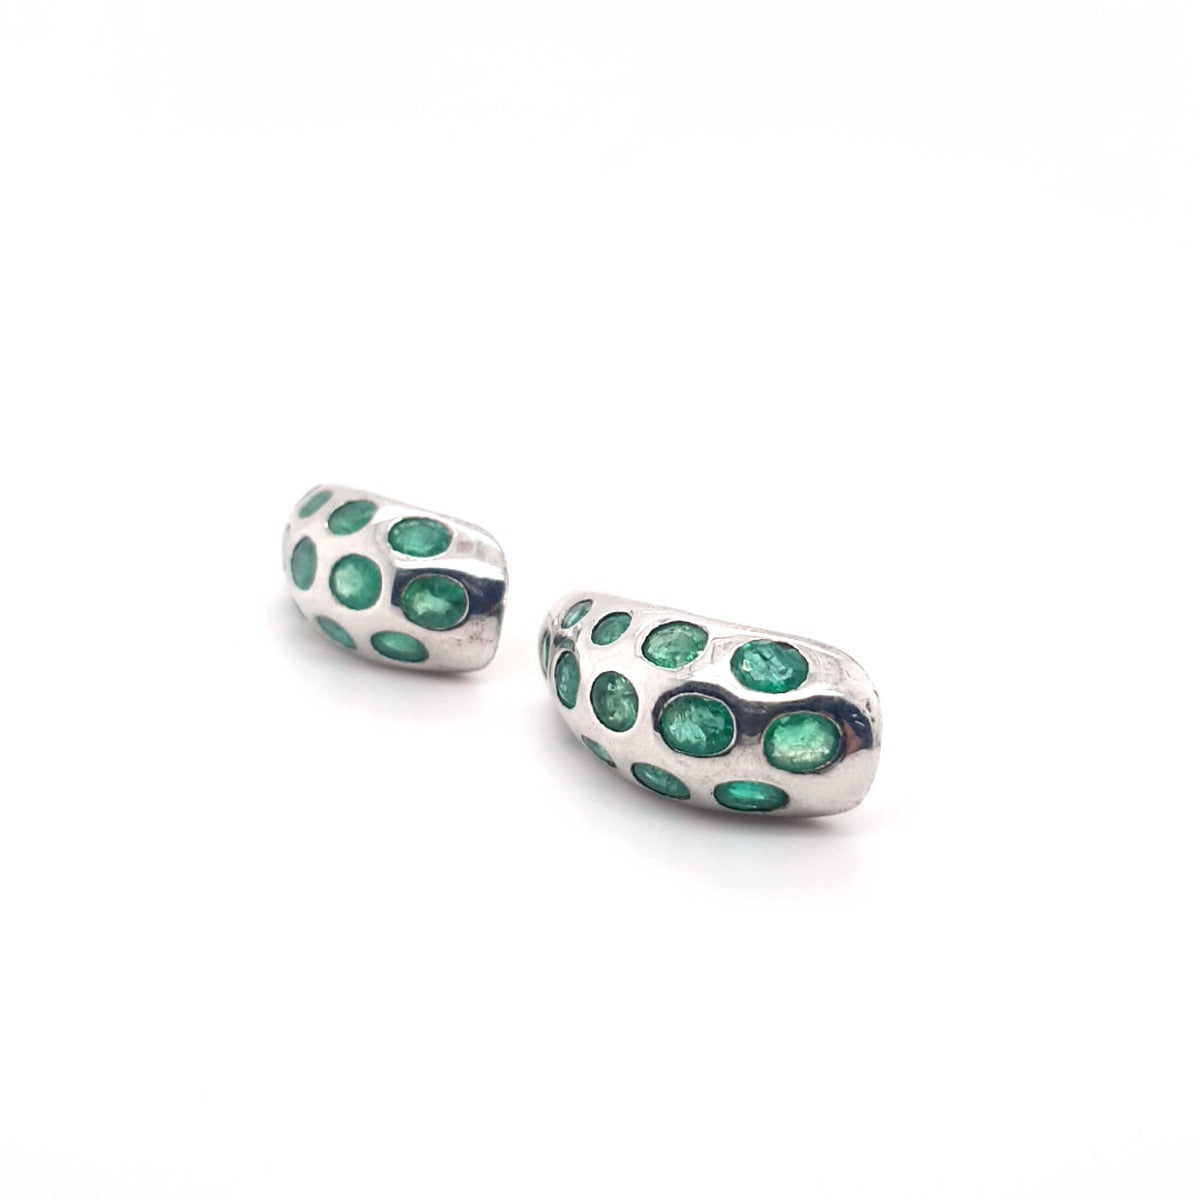 Fascinating emerald and diamond earrings